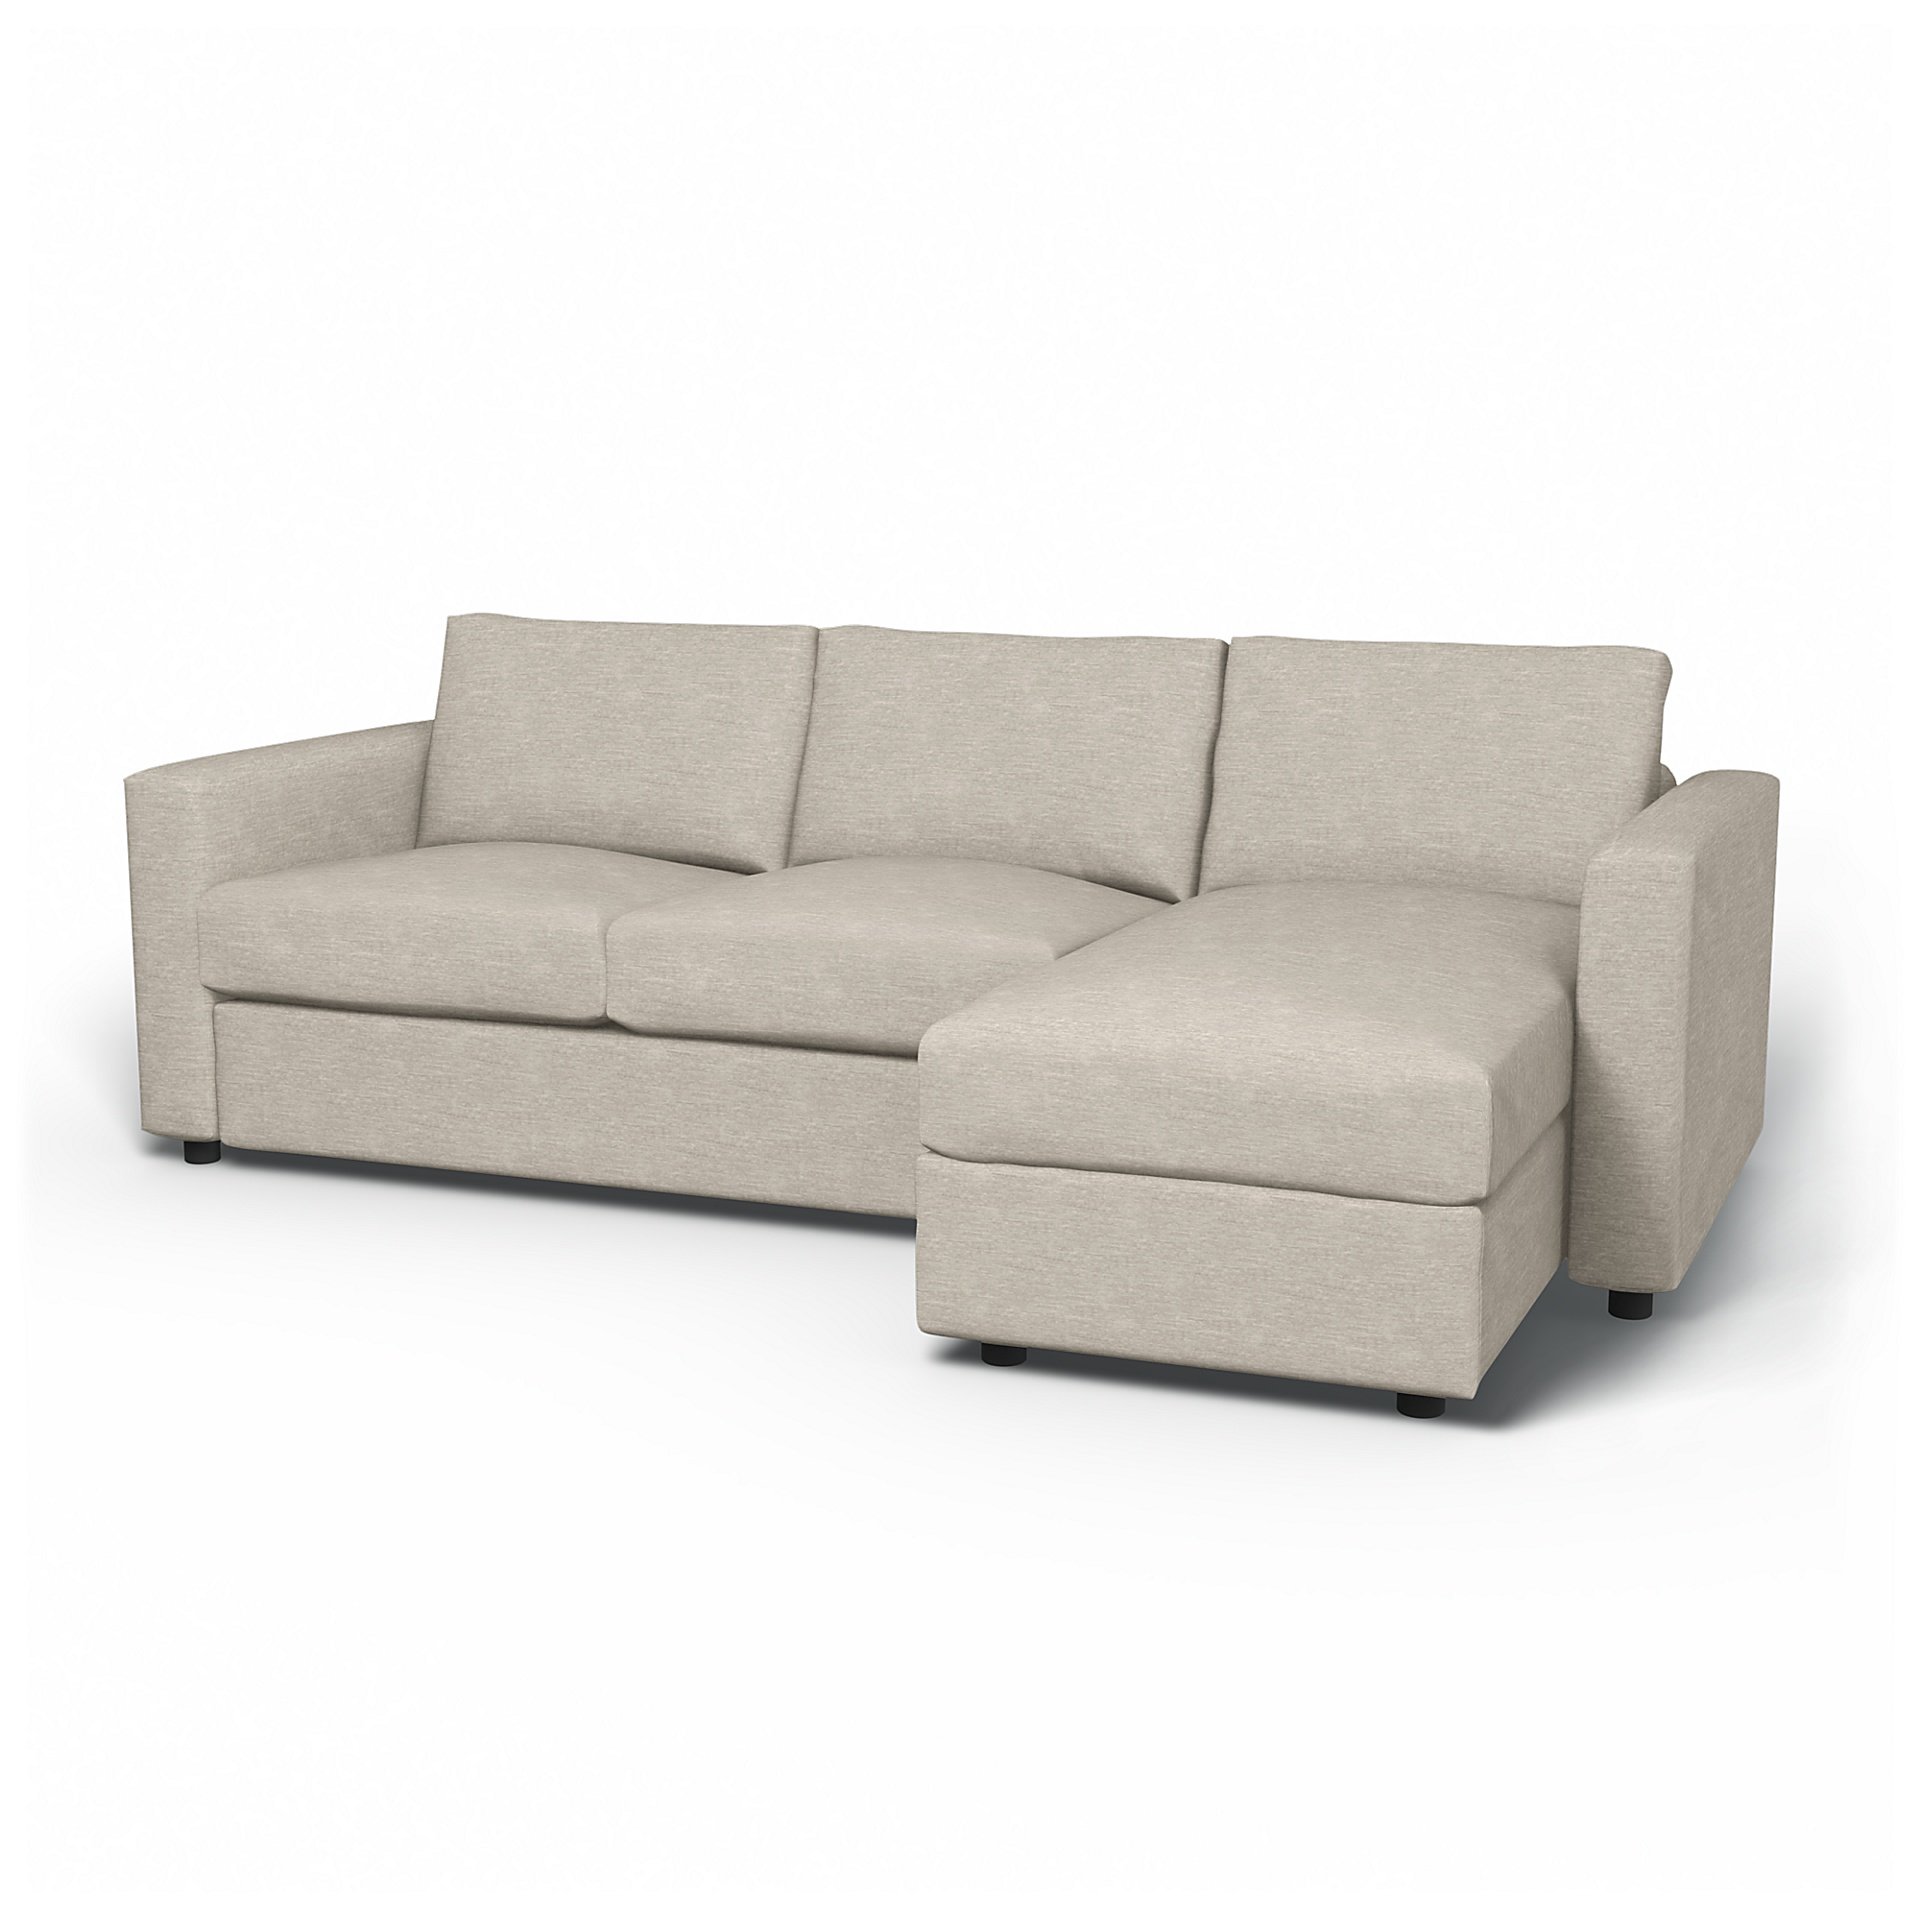 IKEA - Vimle 2 Seater Sofa with Chaise Cover, Natural White, Velvet - Bemz